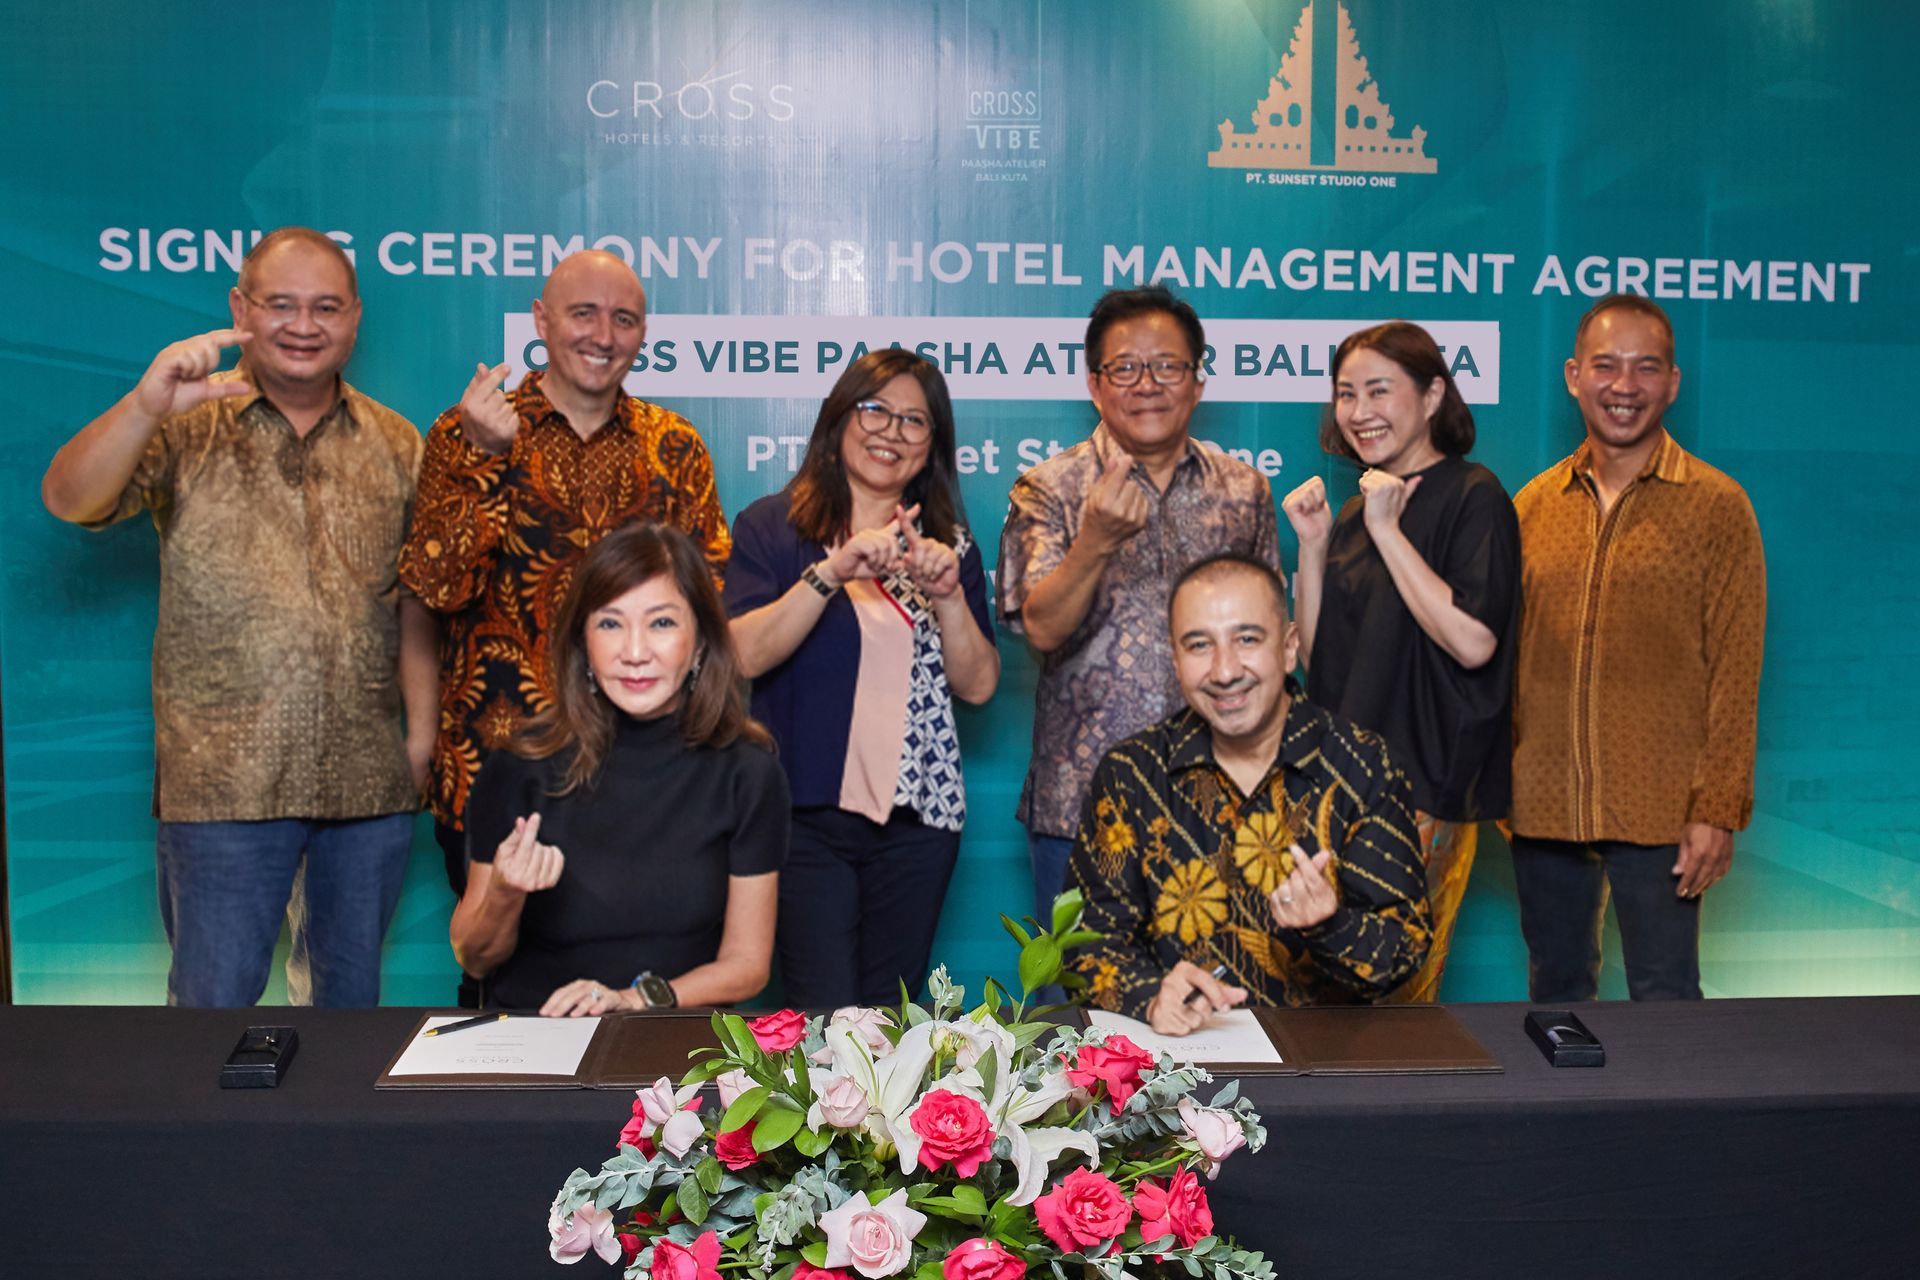 Cross Vibe Paasha Atelier Bali Kuta Signing Ceremony